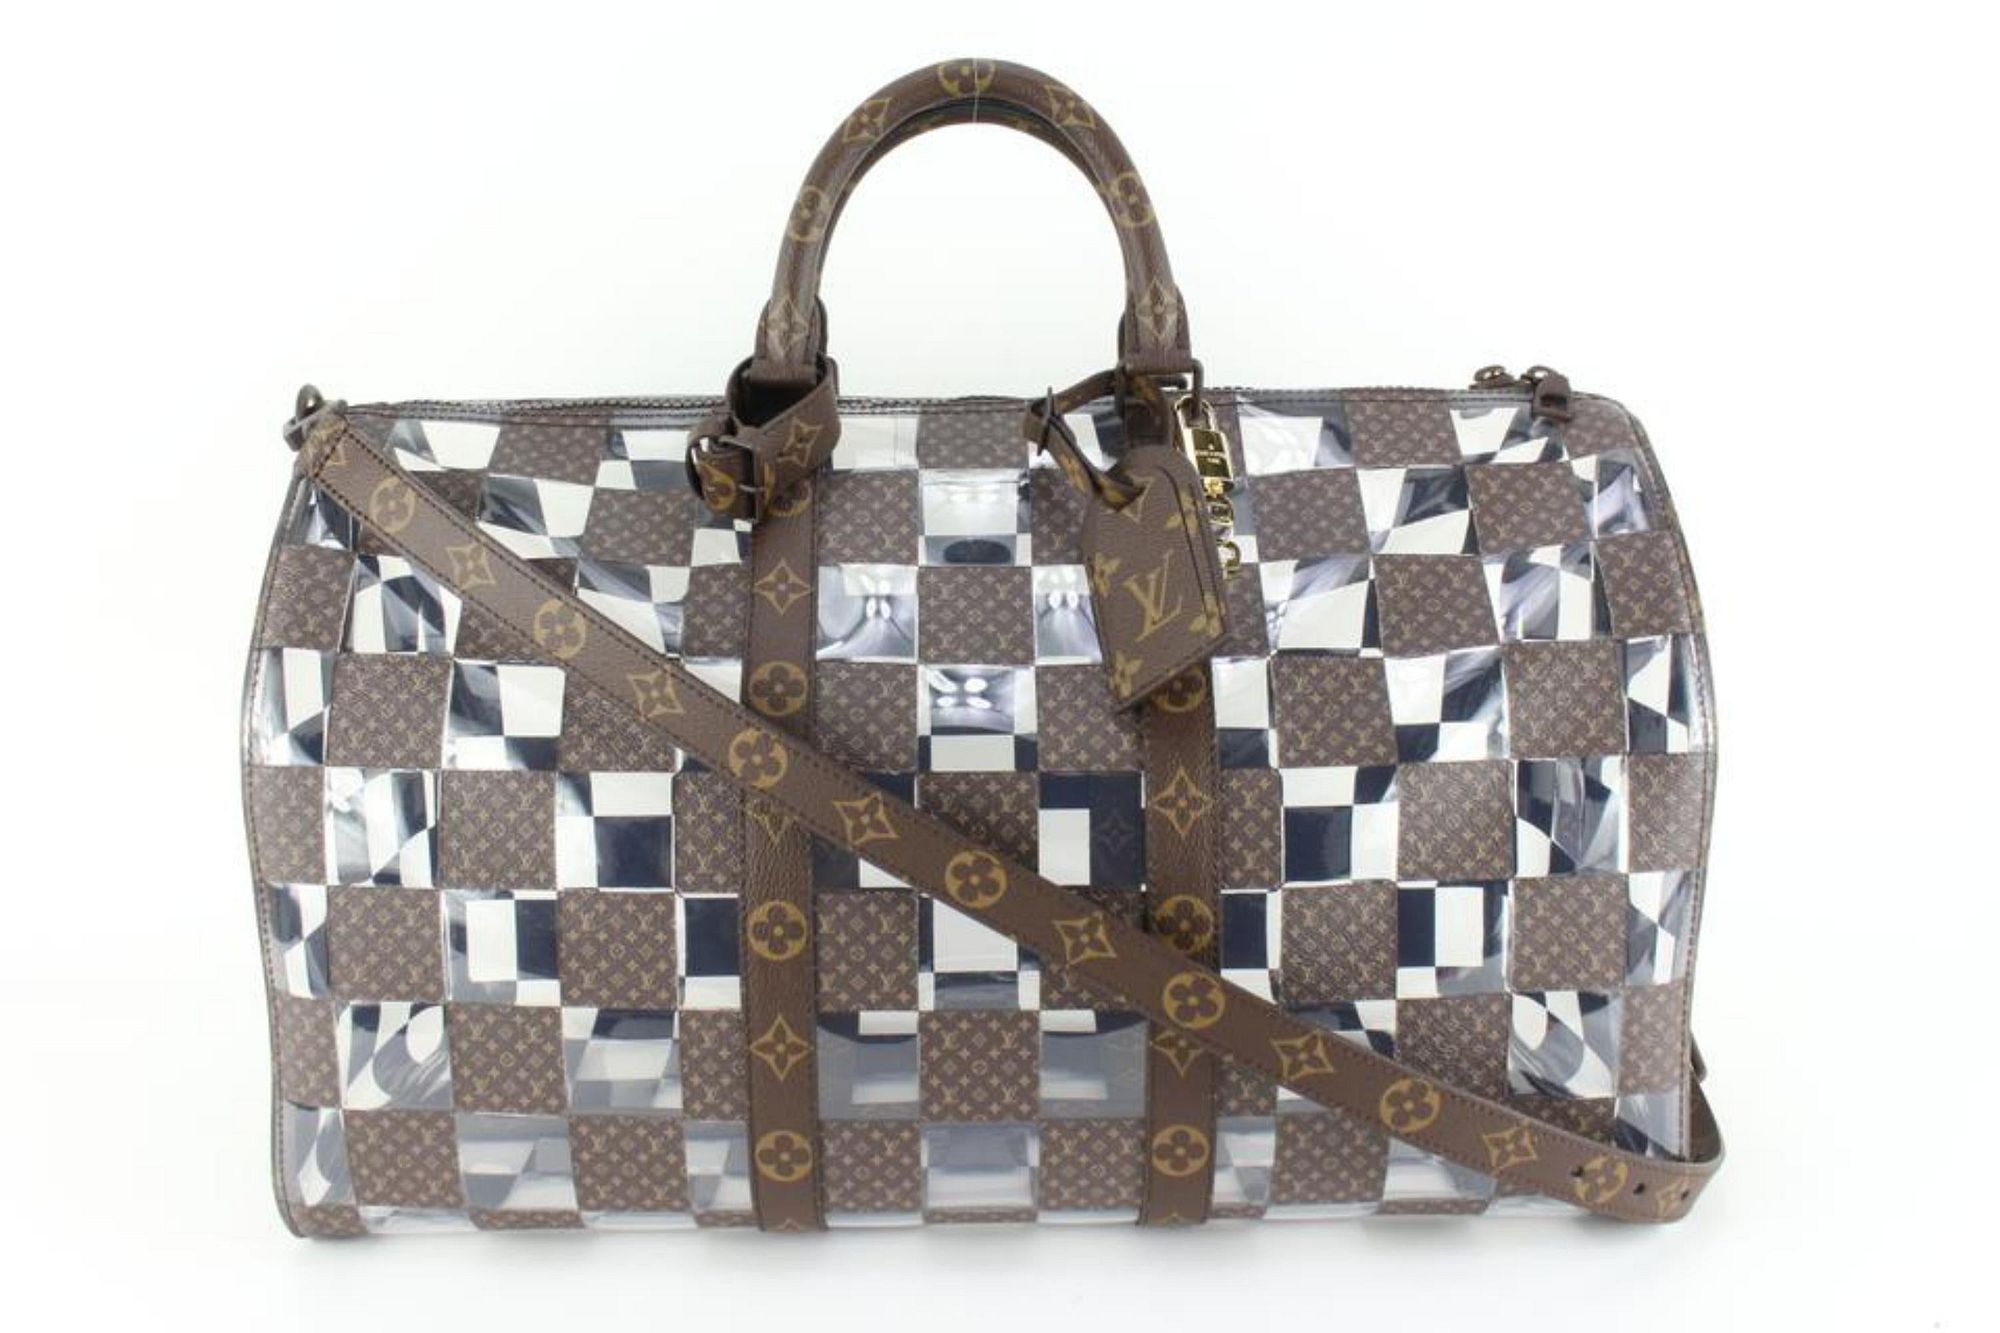 Sold at Auction: Louis Vuitton, LV Louis Vuitton - Keepall 50 Large Duffle  Bag - Brown Monogram Travel